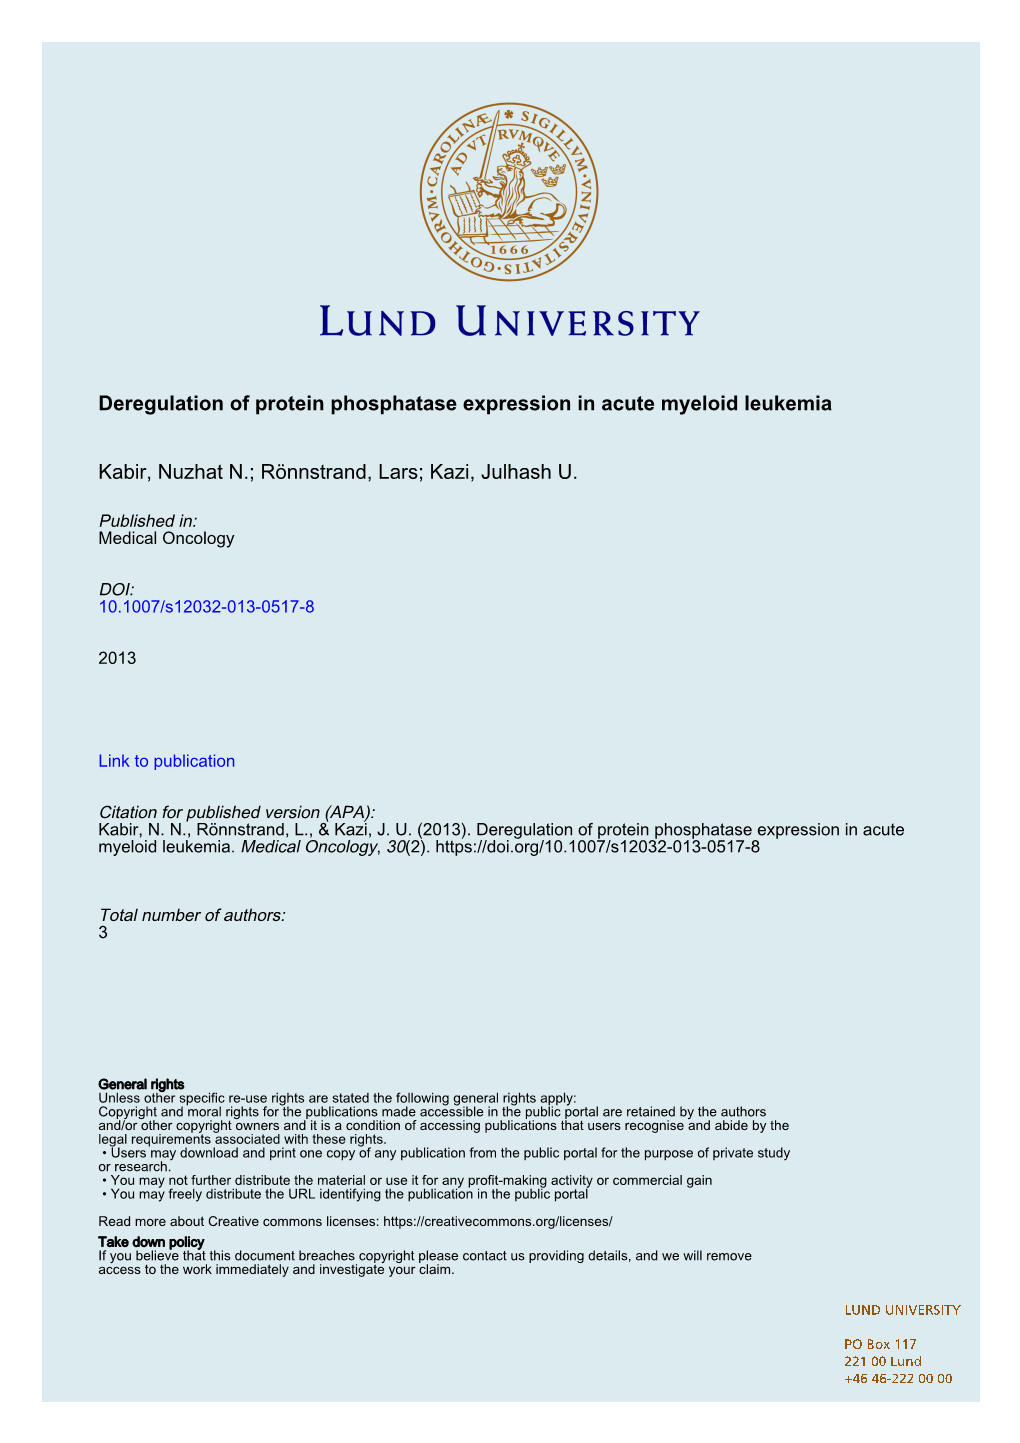 Deregulation of Protein Phosphatase Expression in Acute Myeloid Leukemia